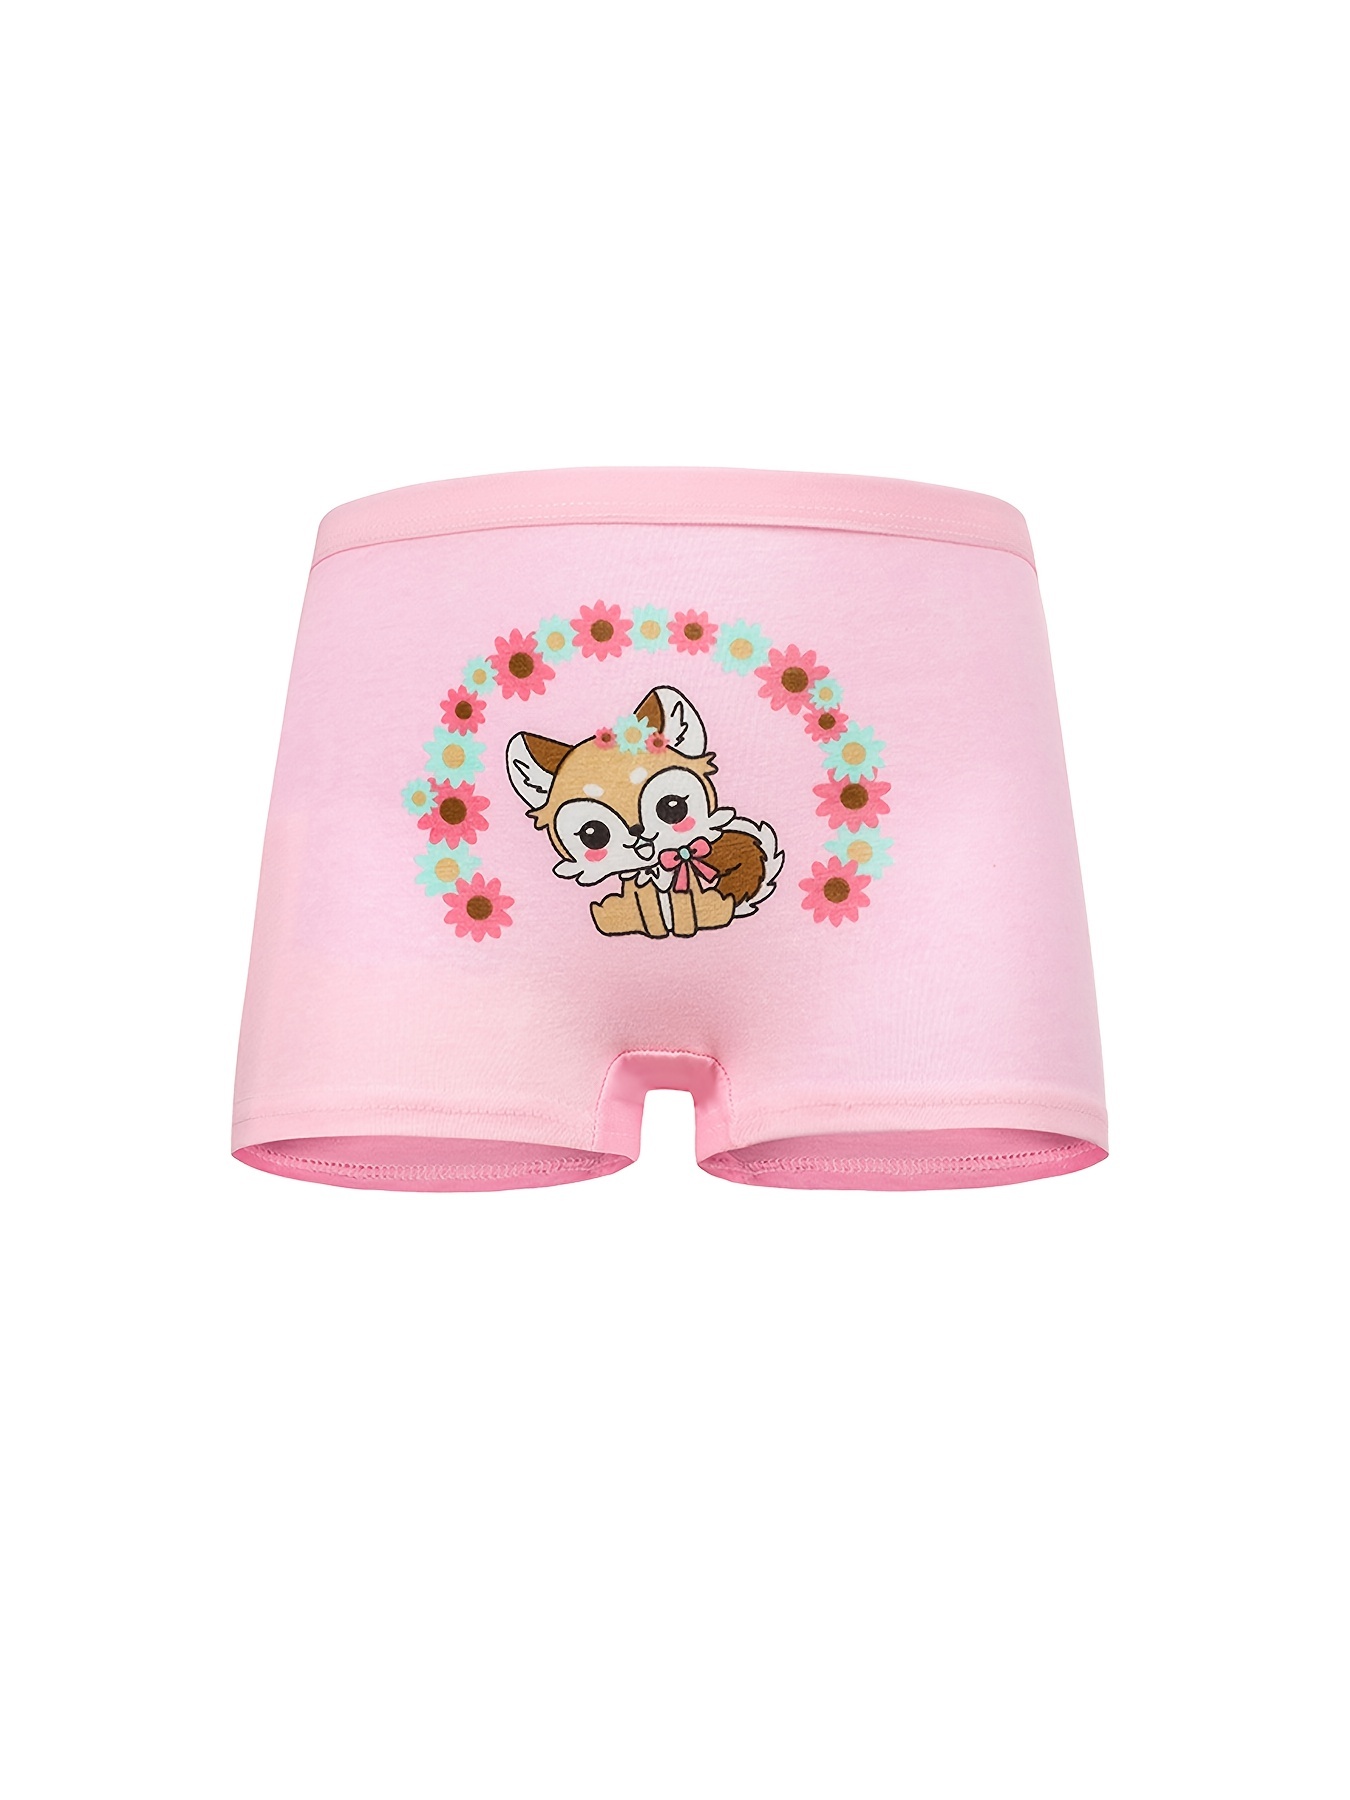 Cotton Childrens Underwear Cartoon Baby Shorts Panties Boxer